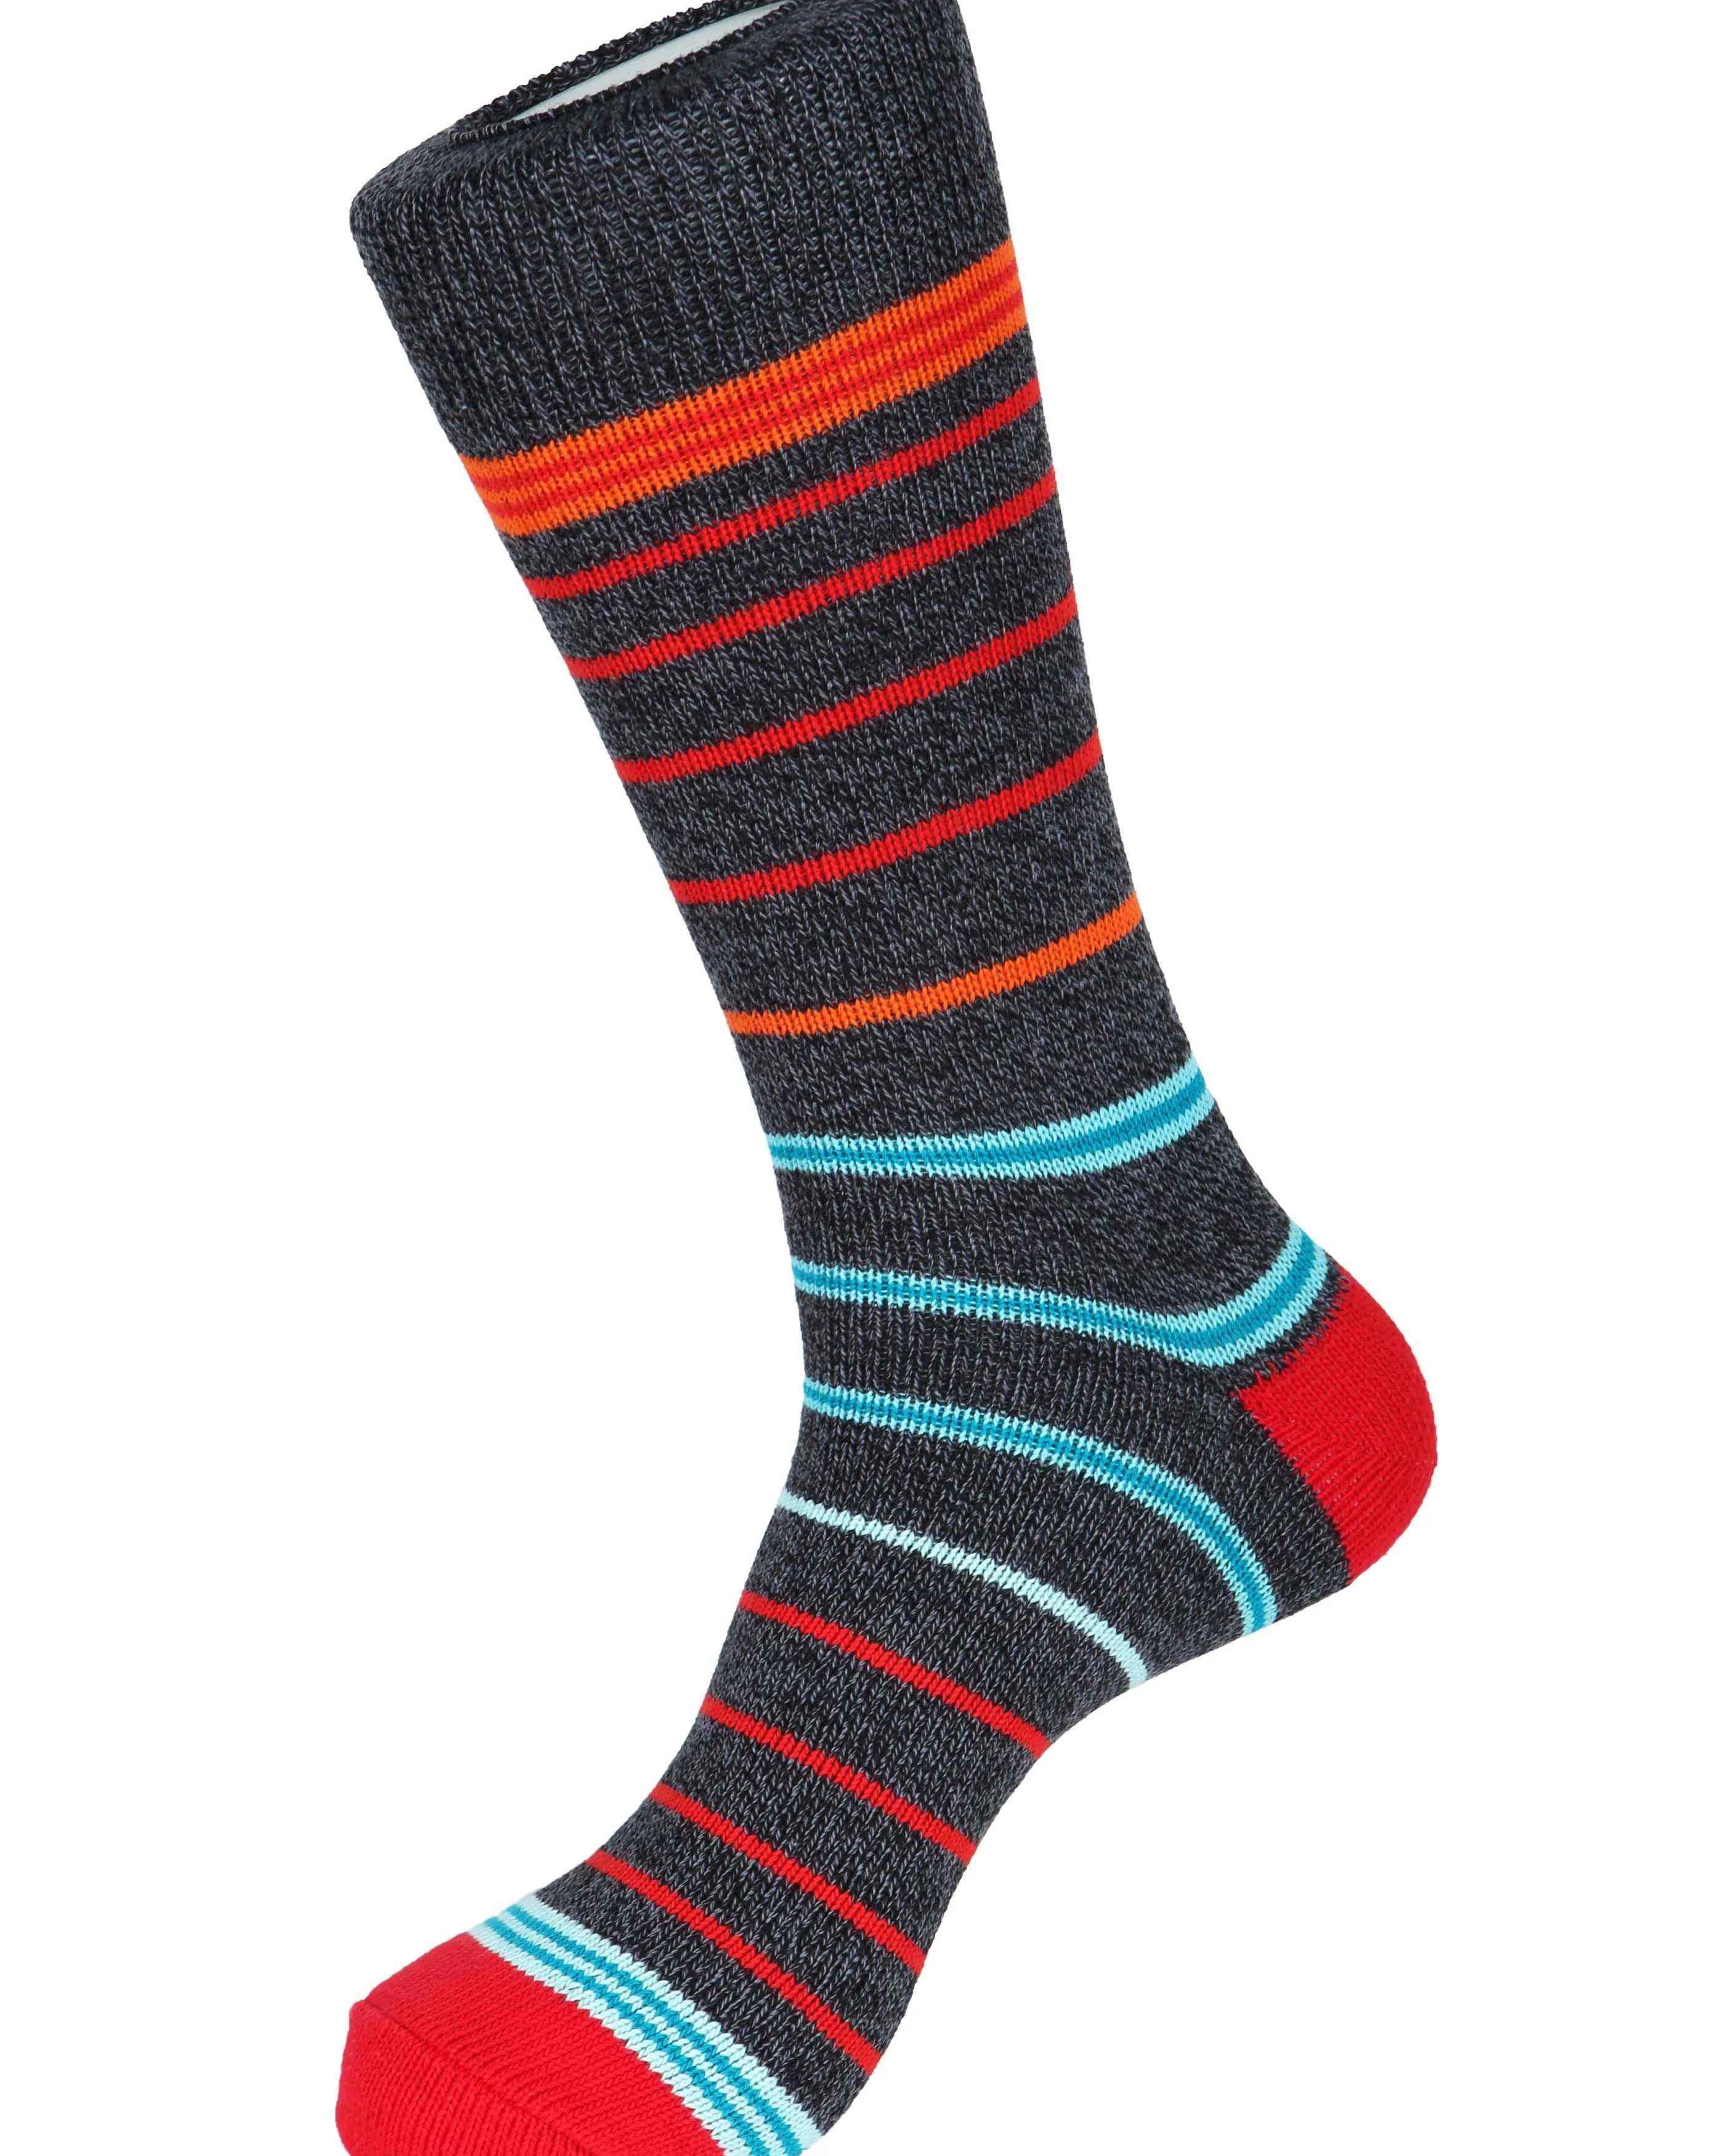 Candy Stripe Boot Socks - Men's Socks at Menzclub